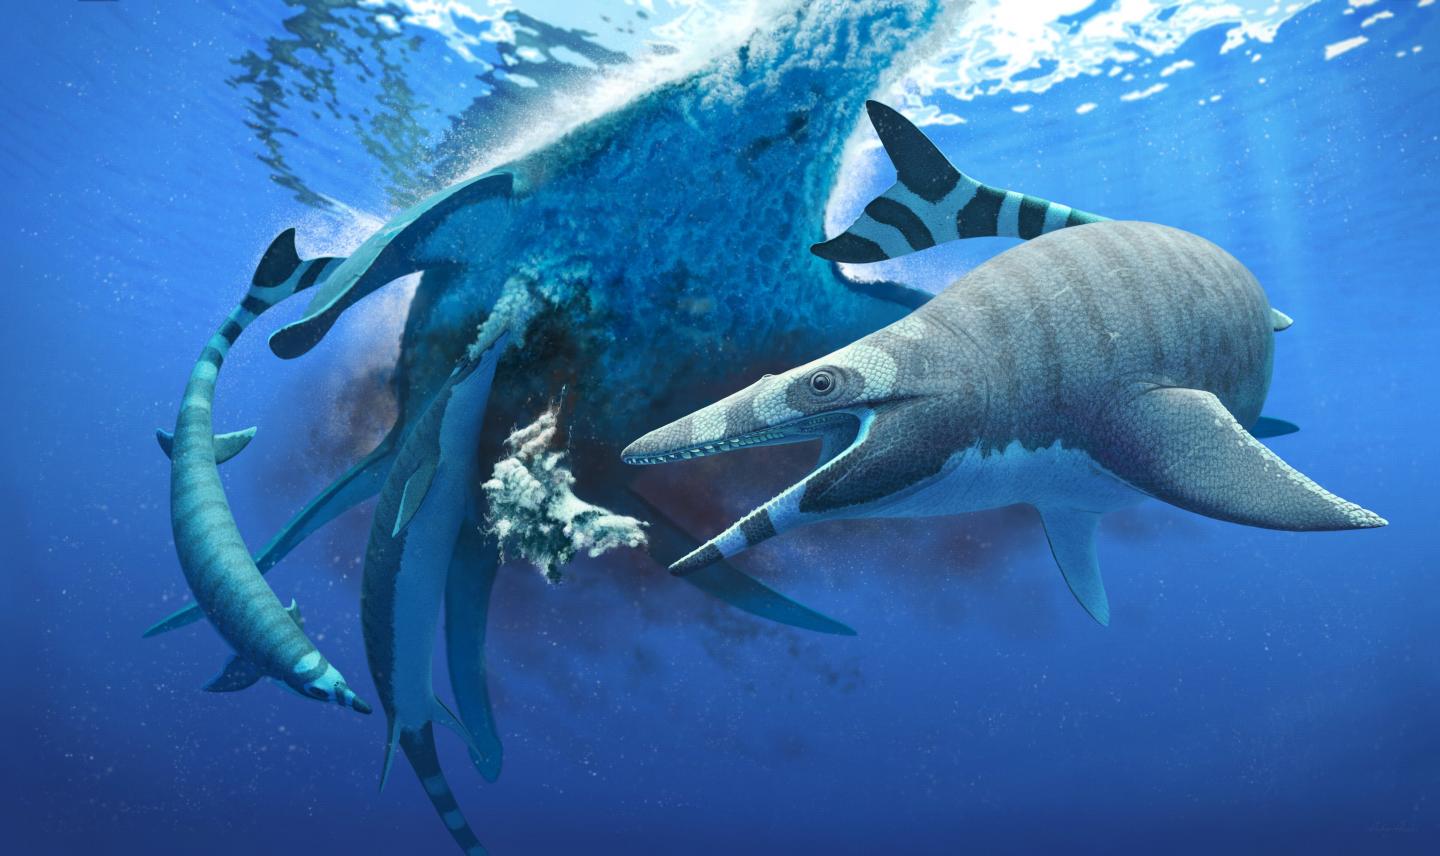 Dinosaur-era sea lizard had teeth like a shar | EurekAlert!